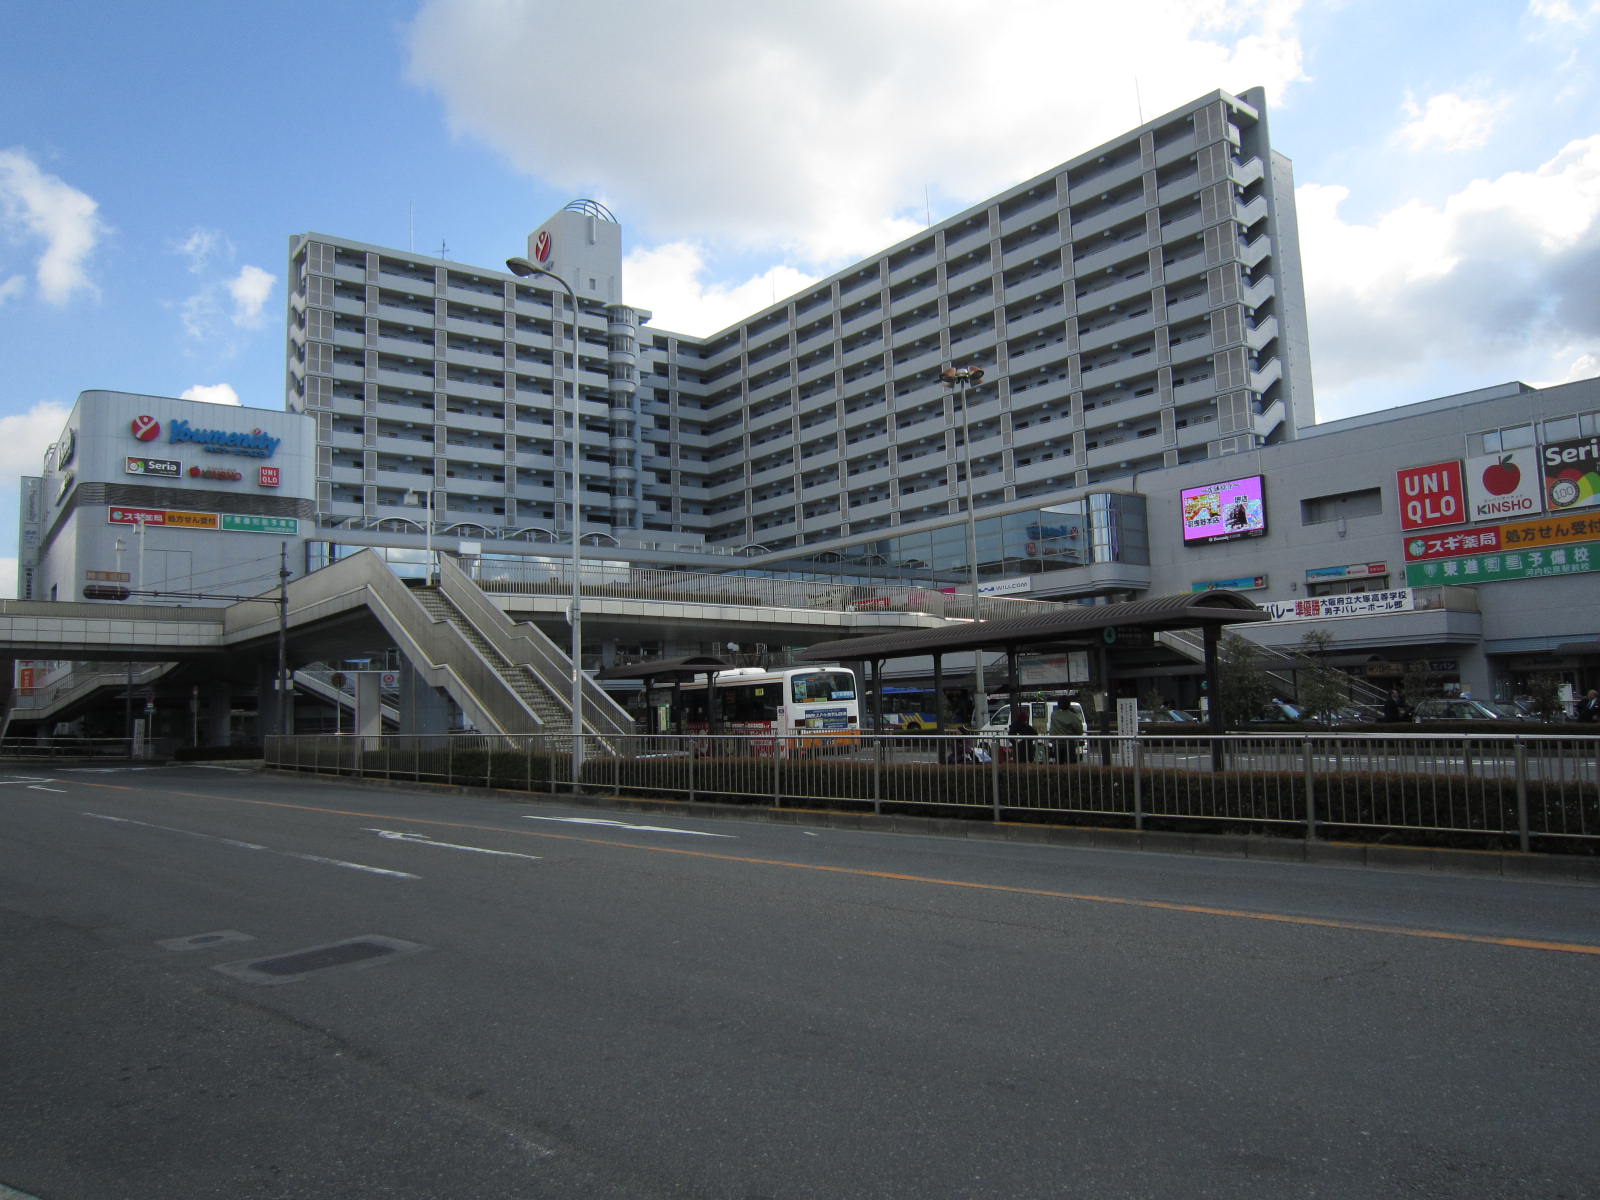 Shopping centre. Dream 596m until sanity Matsubara (shopping center)